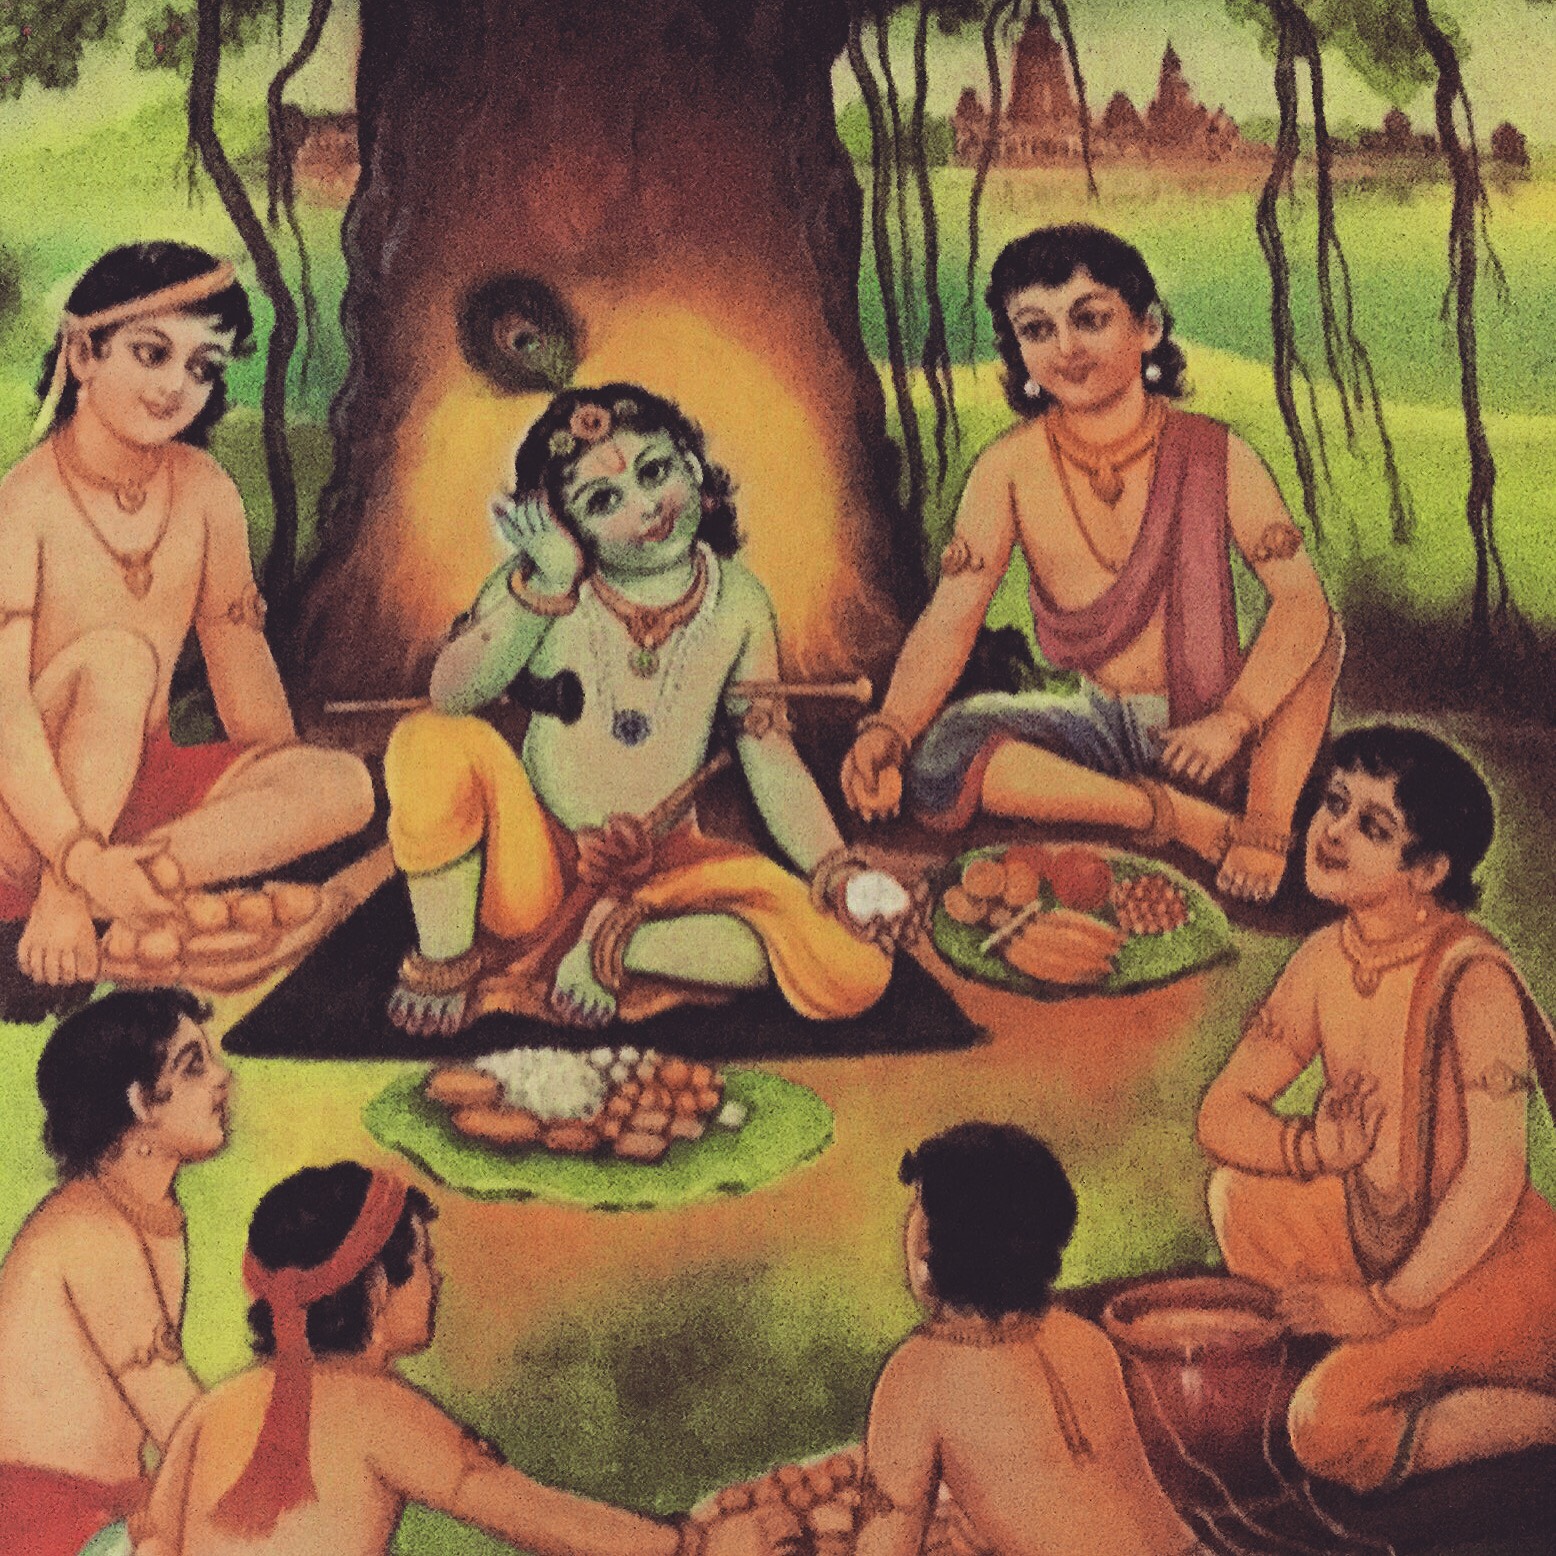 maakhan gopal image, lord krishna image